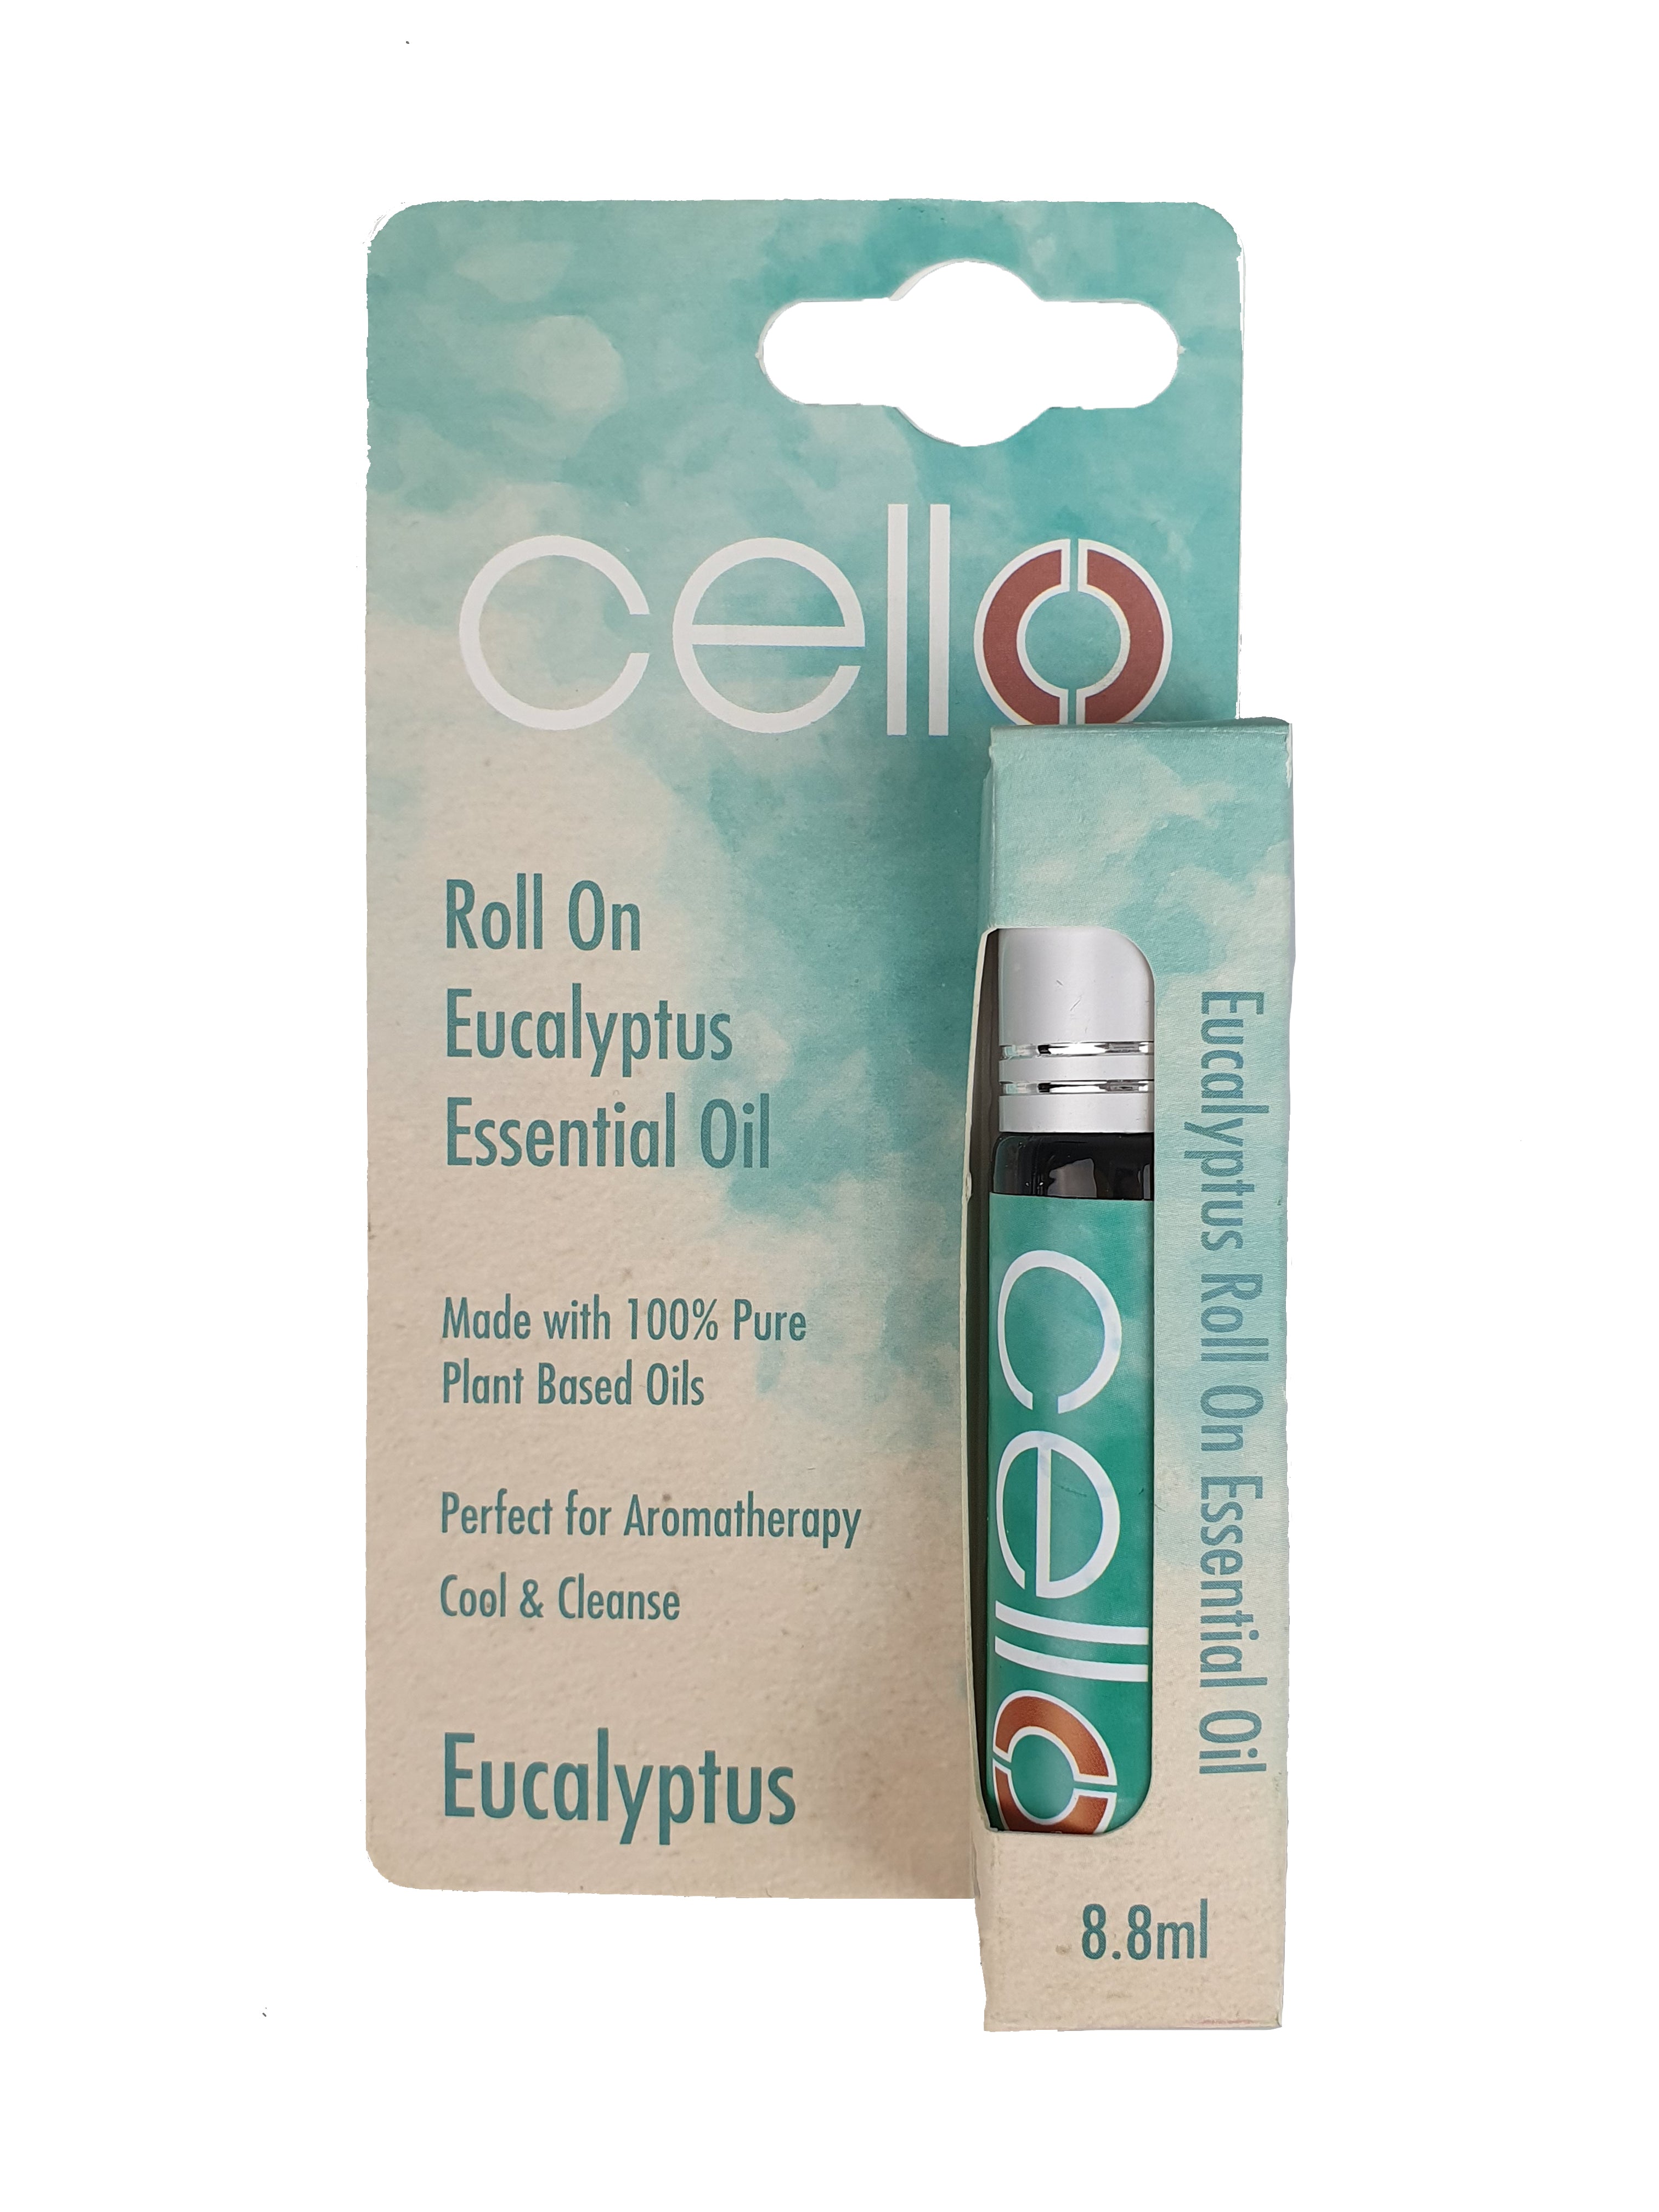 Cello - Eucalyptus Roll On Natural Essential Oil 8.8ml